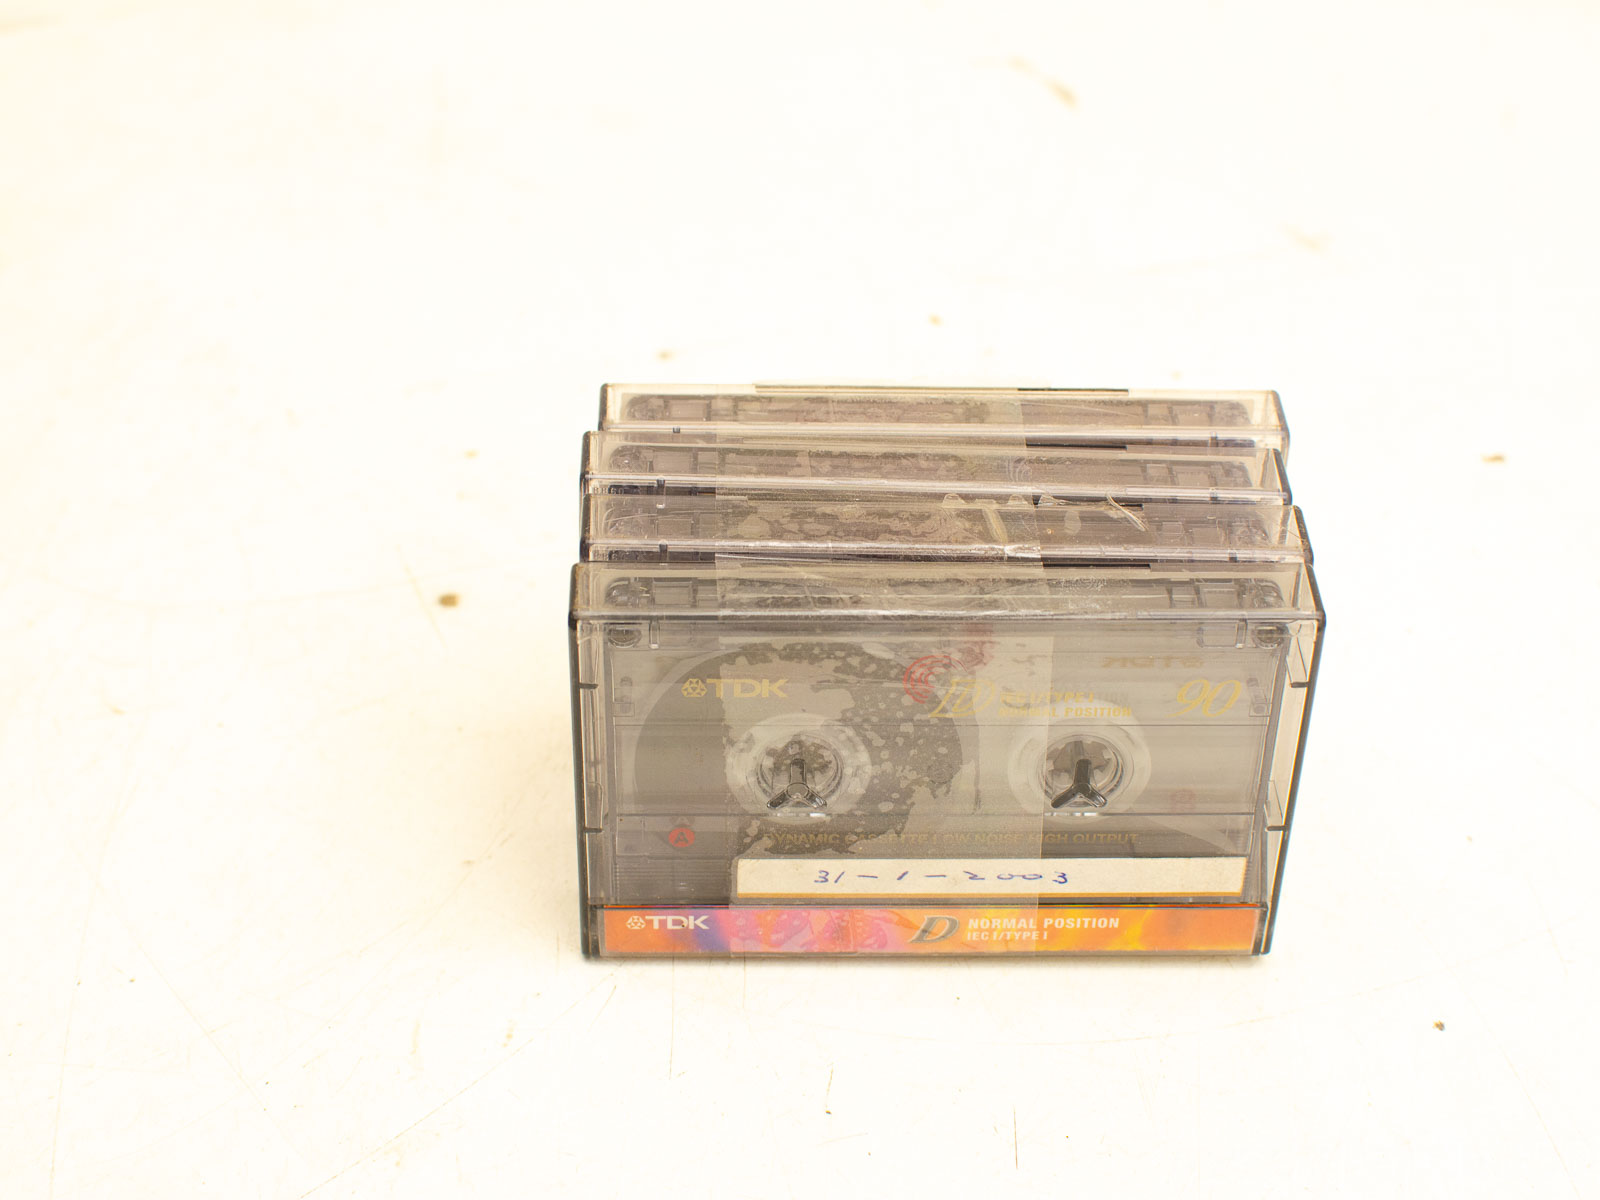 4 tdk cassettebandjes 31212